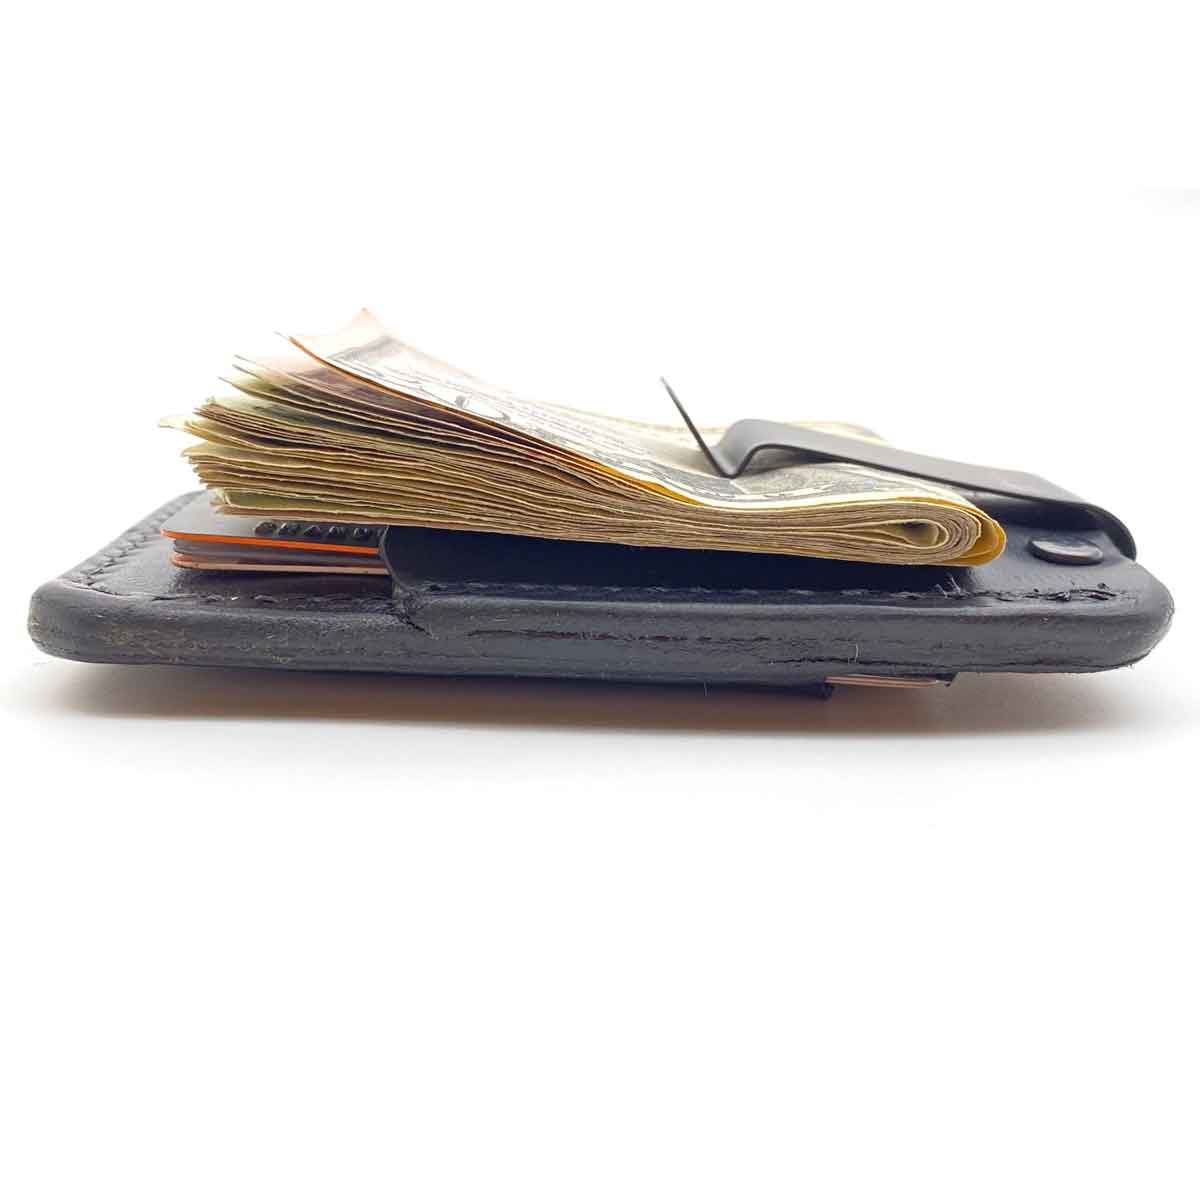 AccessoryHappy RFID Belt Loop Wallets for Men - Minimalist Genuine Leather  Money Carrier Clip Wallet, BLACK, Minimalist